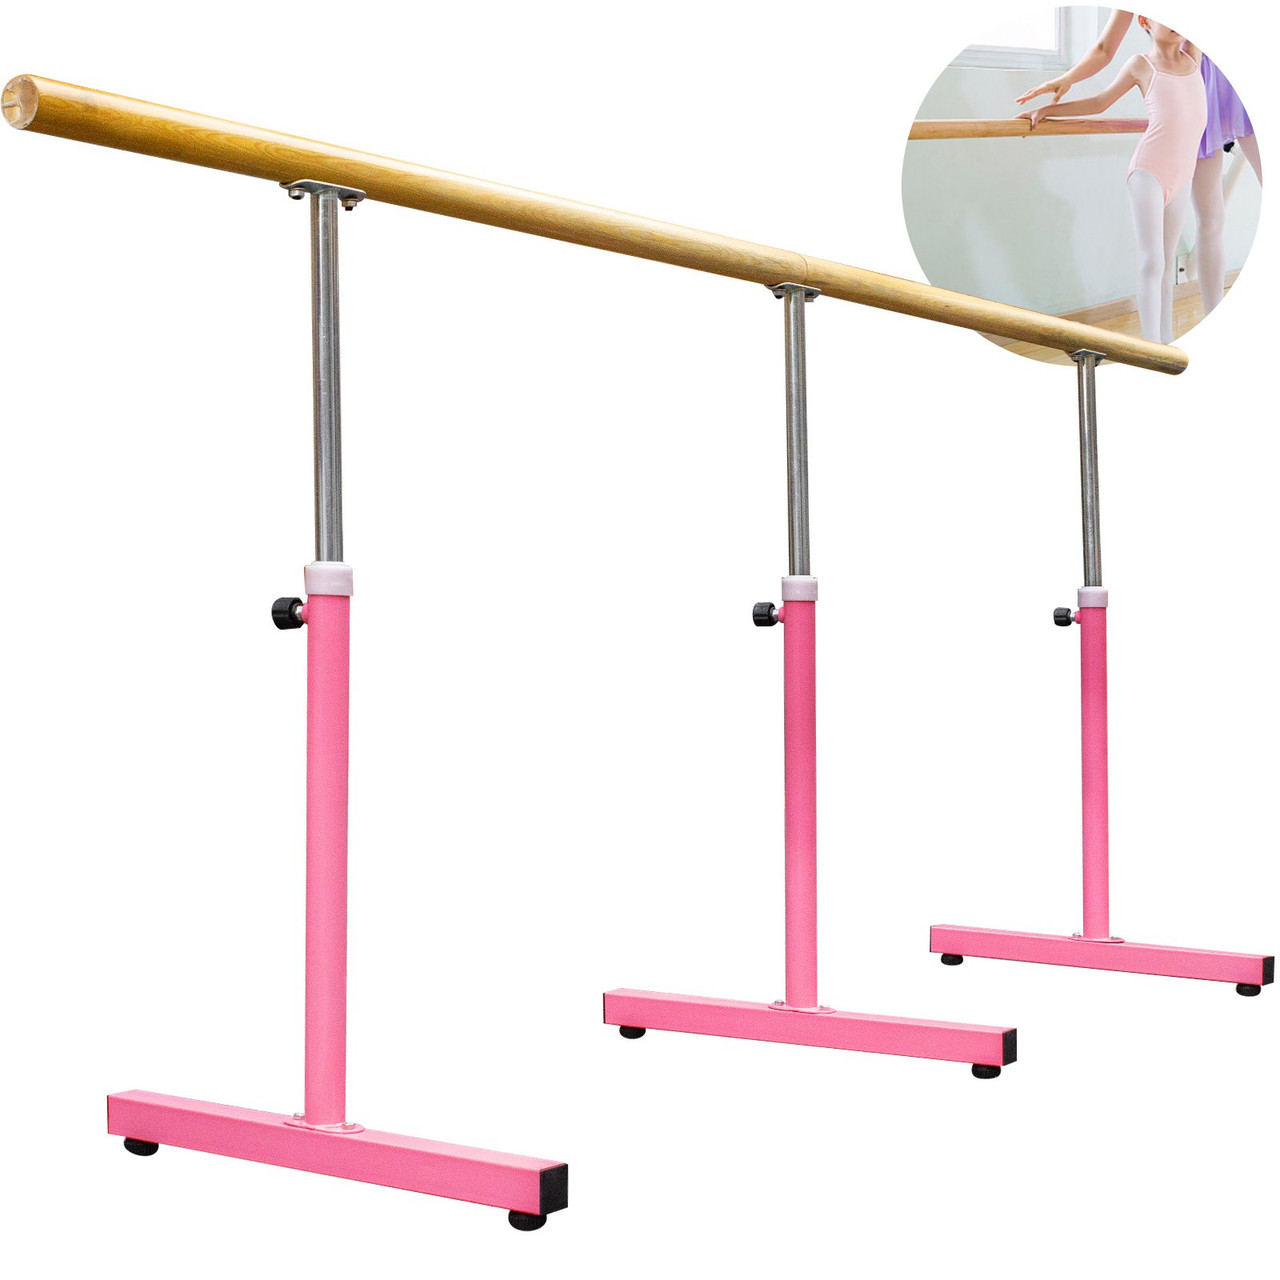 10FT Length Single Ballet Barre,Portable Pink Dance Bar,Adjustable Height 2.5FT - 3.8FT, Freestanding Ballet Bar for Stretch, Balance, Pilates, Dance or Exercise